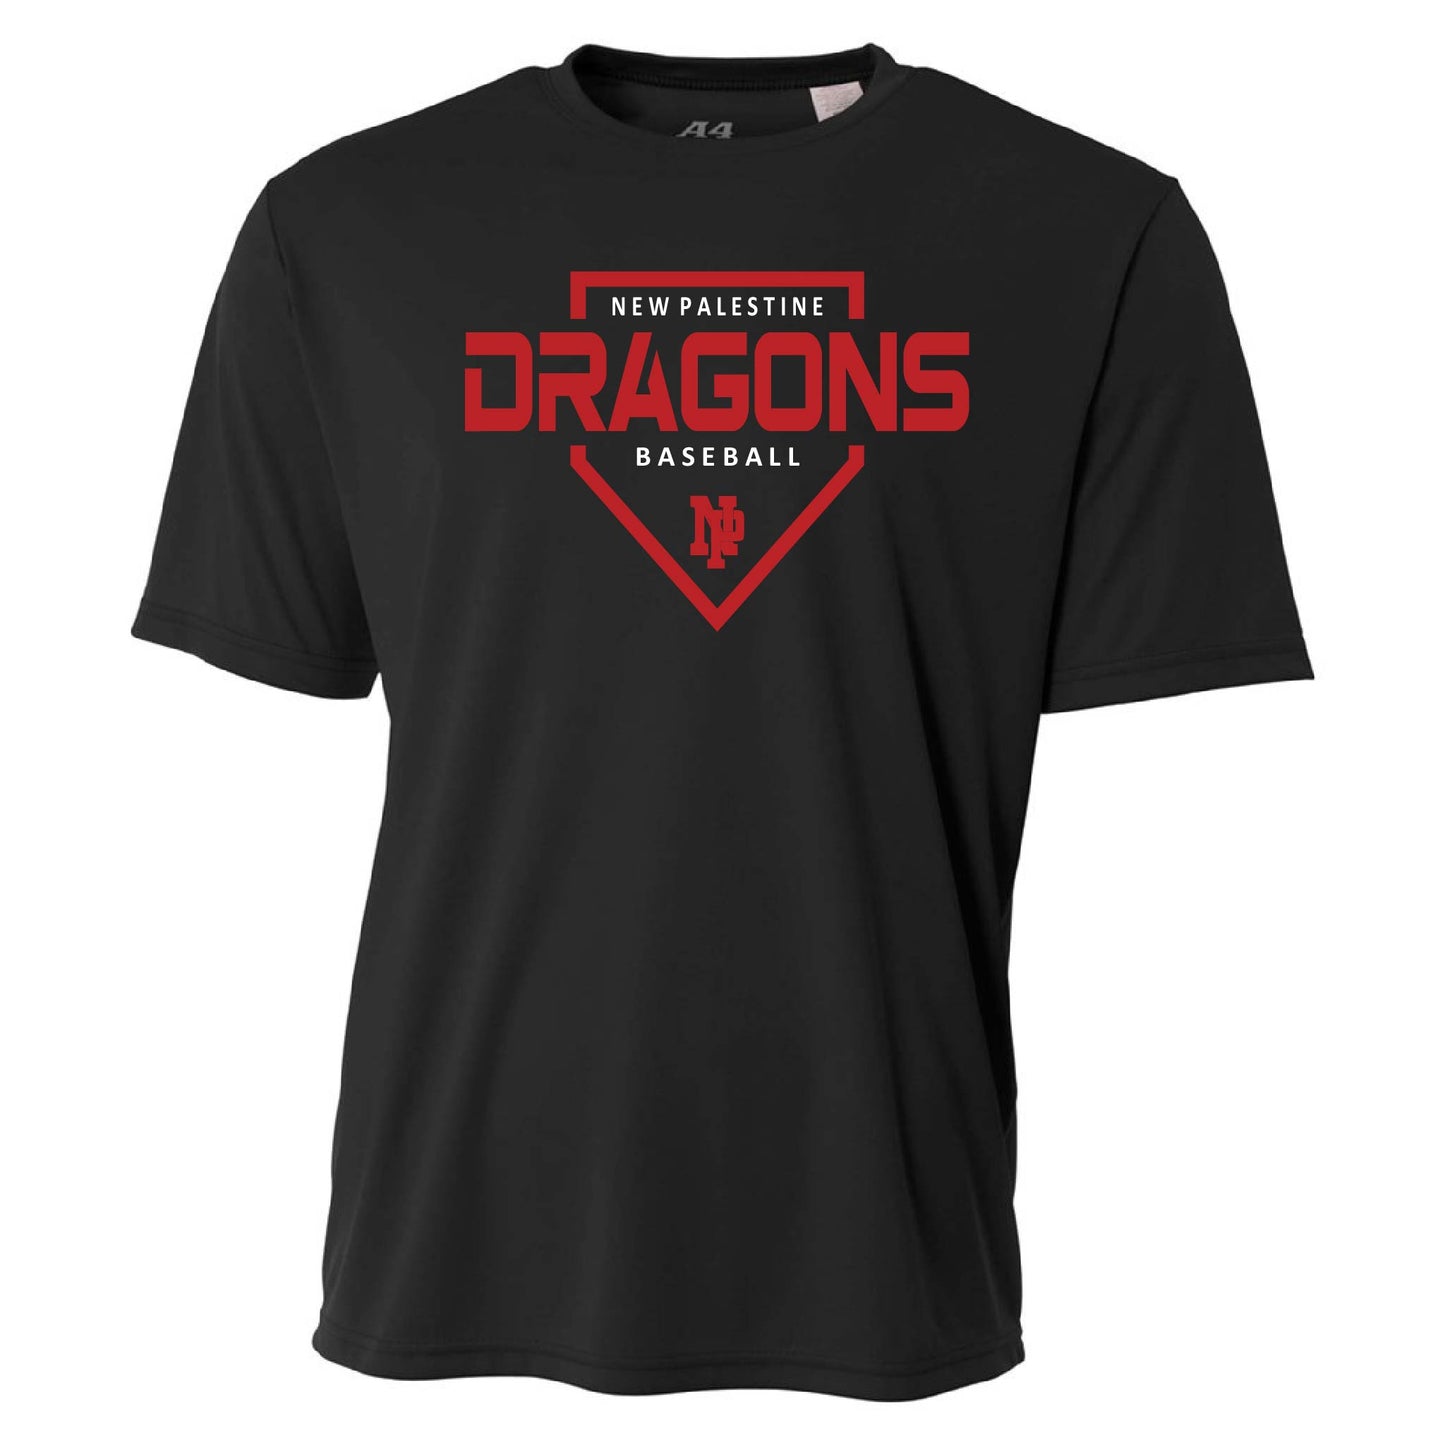 Mens S/S T-Shirt - DRAGONS Baseball